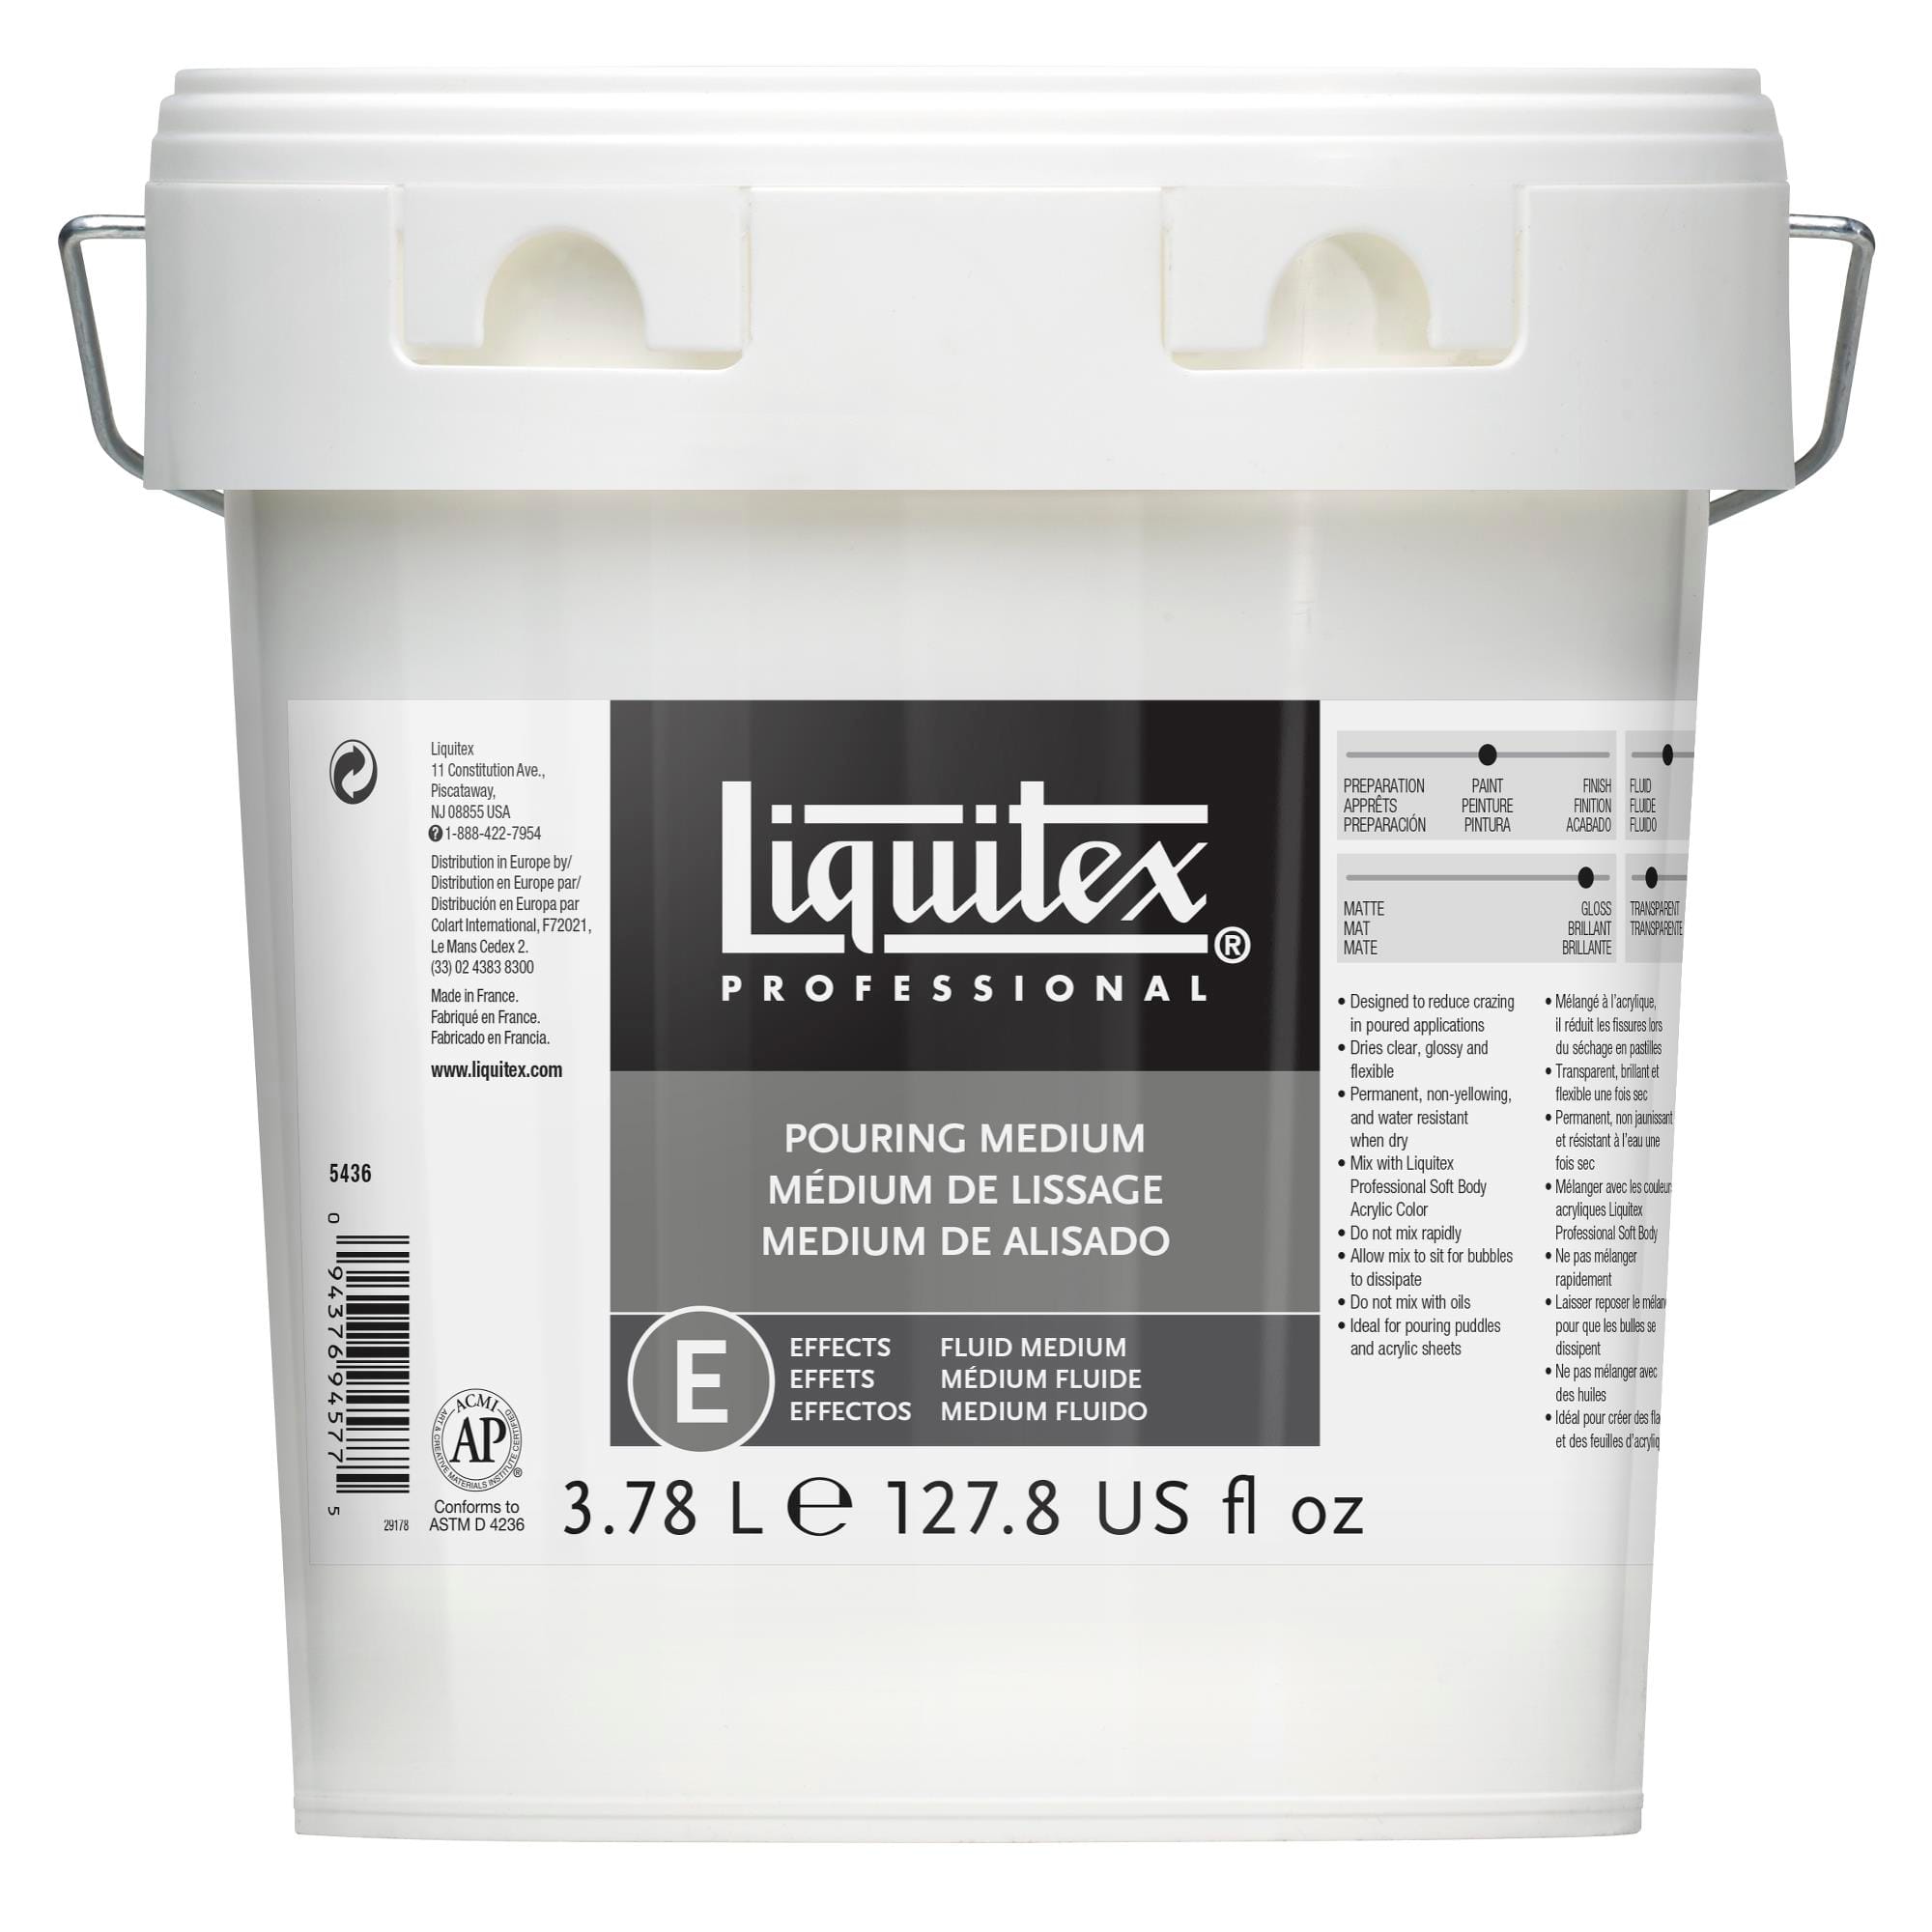 Liquitex&#xAE; Acrylic Mediums Pouring Medium